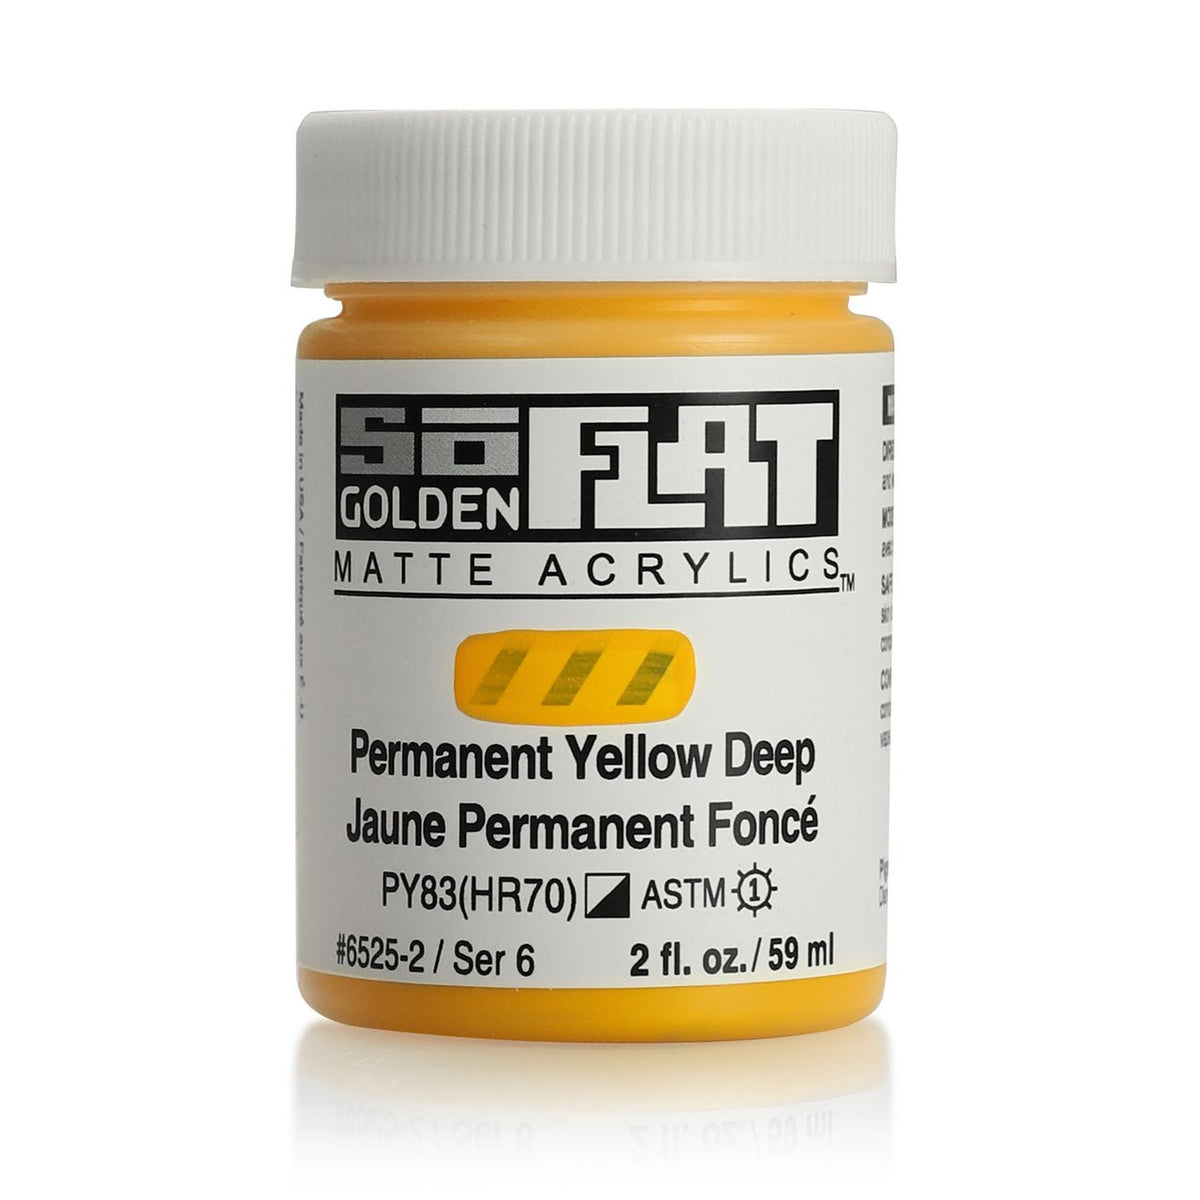 Golden SoFlat Matte Acrylic Paint - Permanent Yellow Deep 2 oz jar - merriartist.com